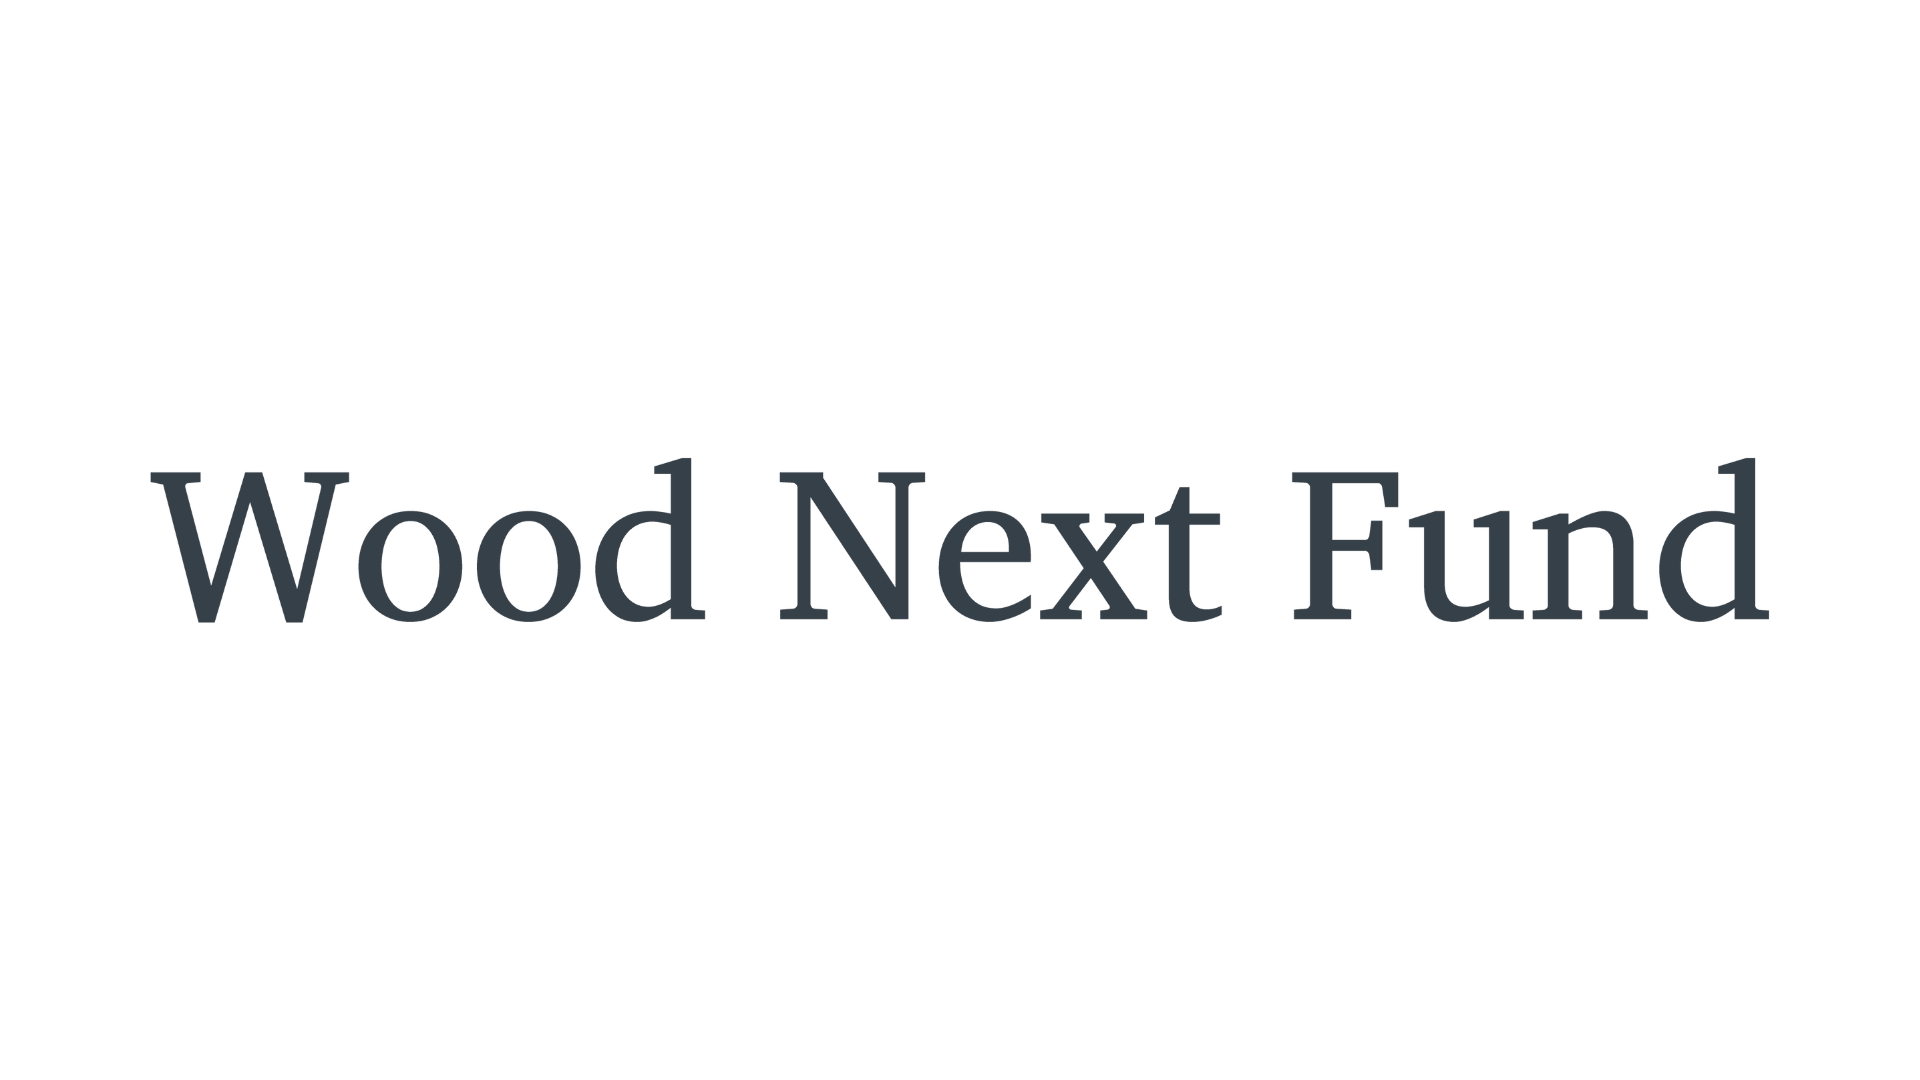 Wood Next Fund logo